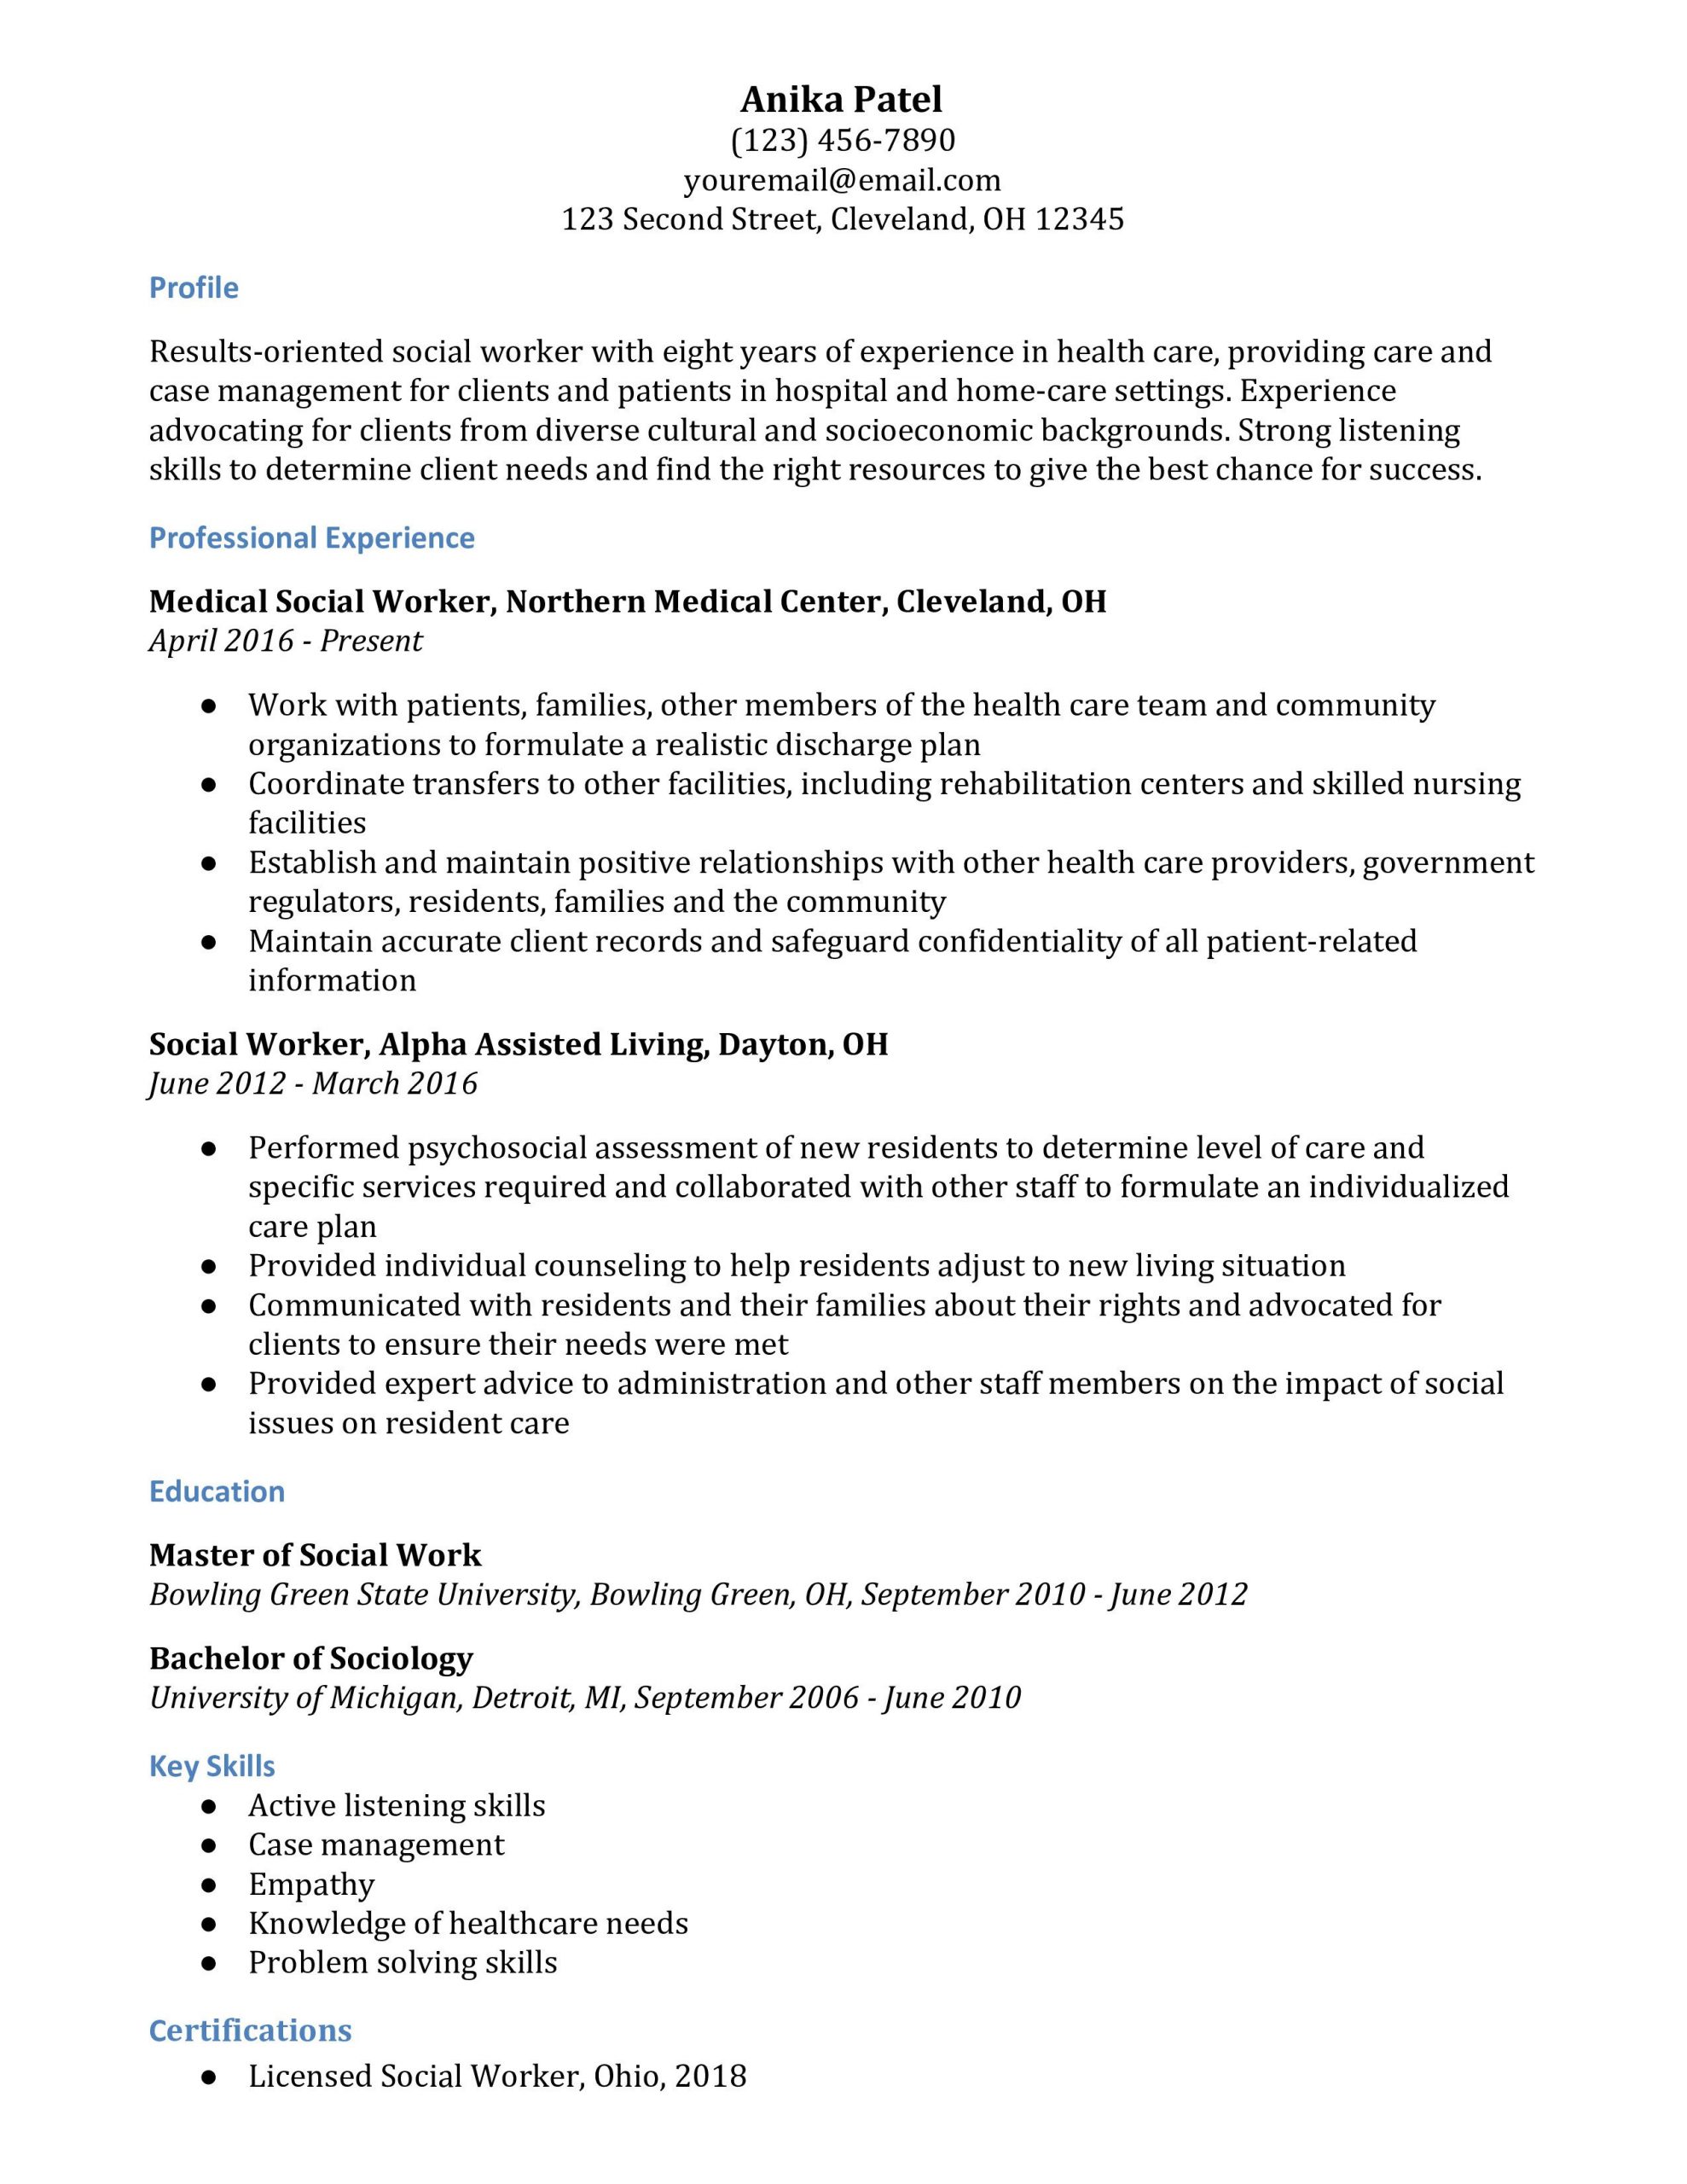 Sample Resume for social Worker Position social Work Resume Examples – Resumebuilder.com